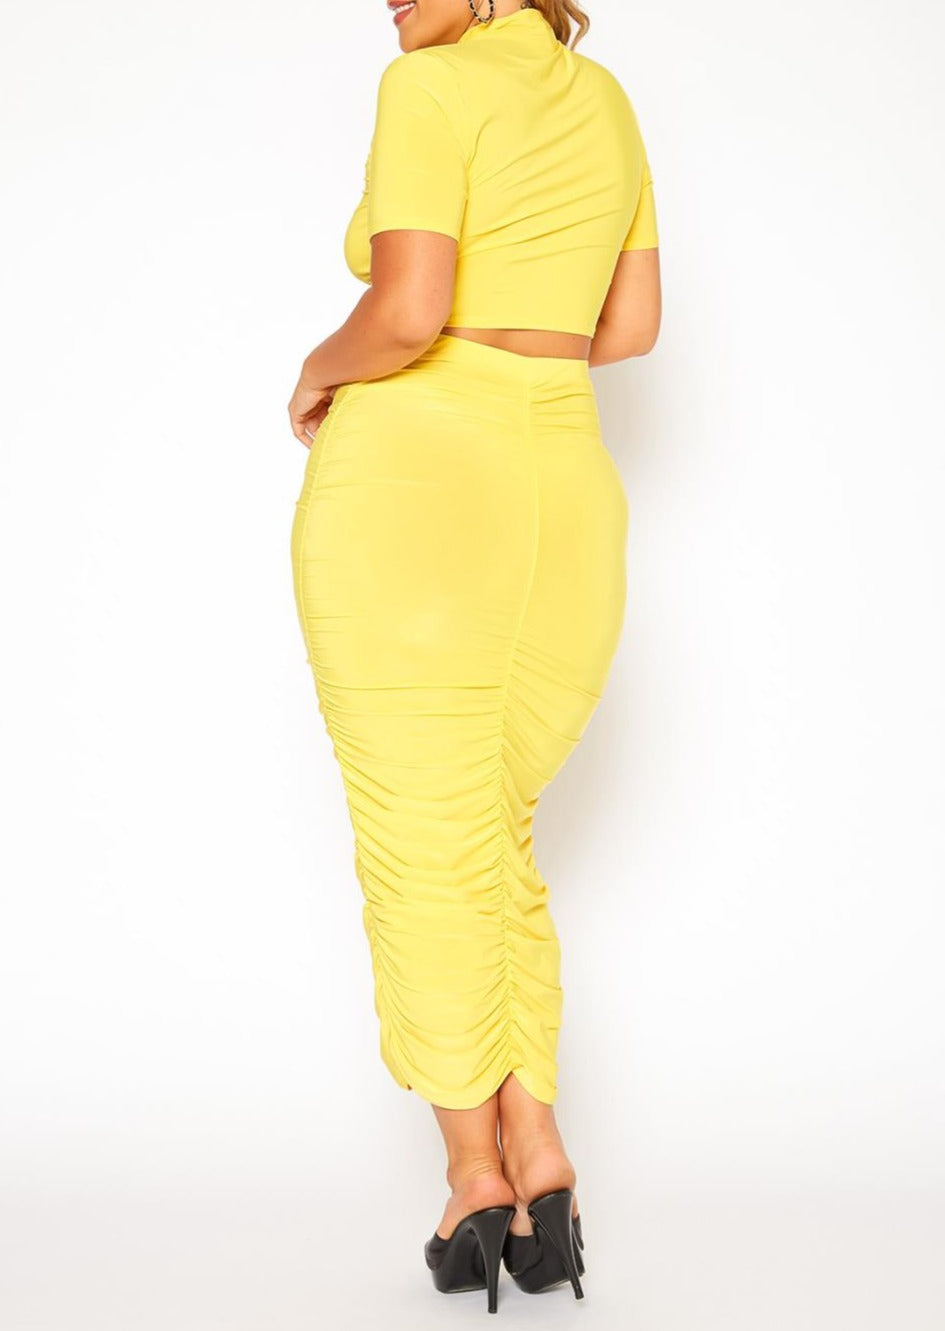 HI Curvy Plus Size Women Ruched Mock Neck Top & Maxi Skirt Sets